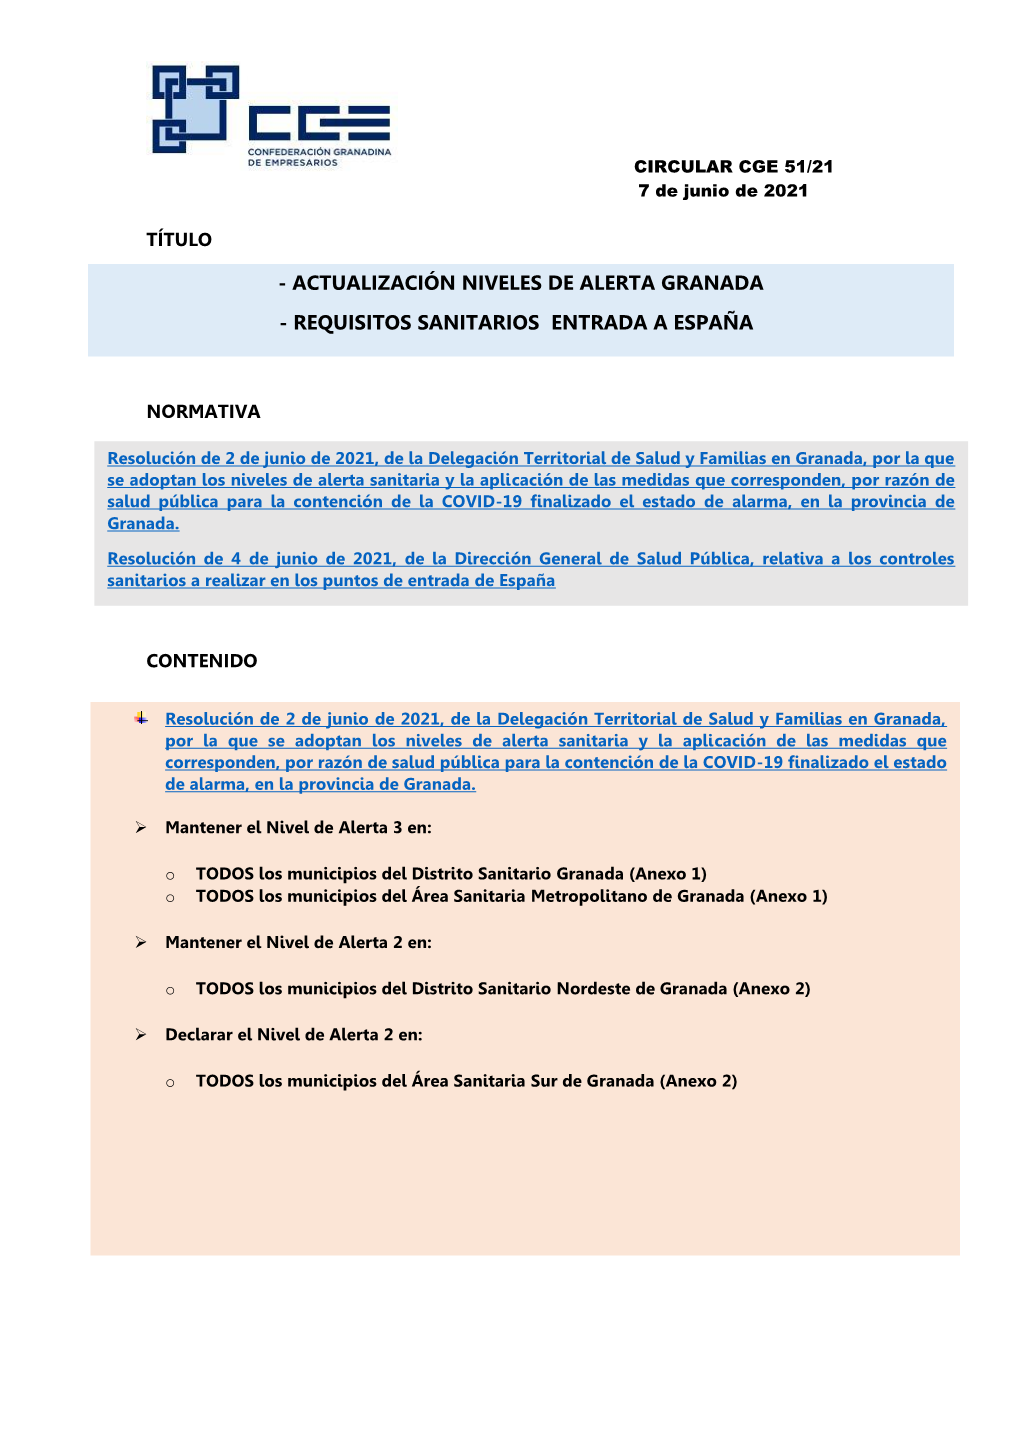 Actualización Niveles De Alerta Granada - Requisitos Sanitarios Entrada a España